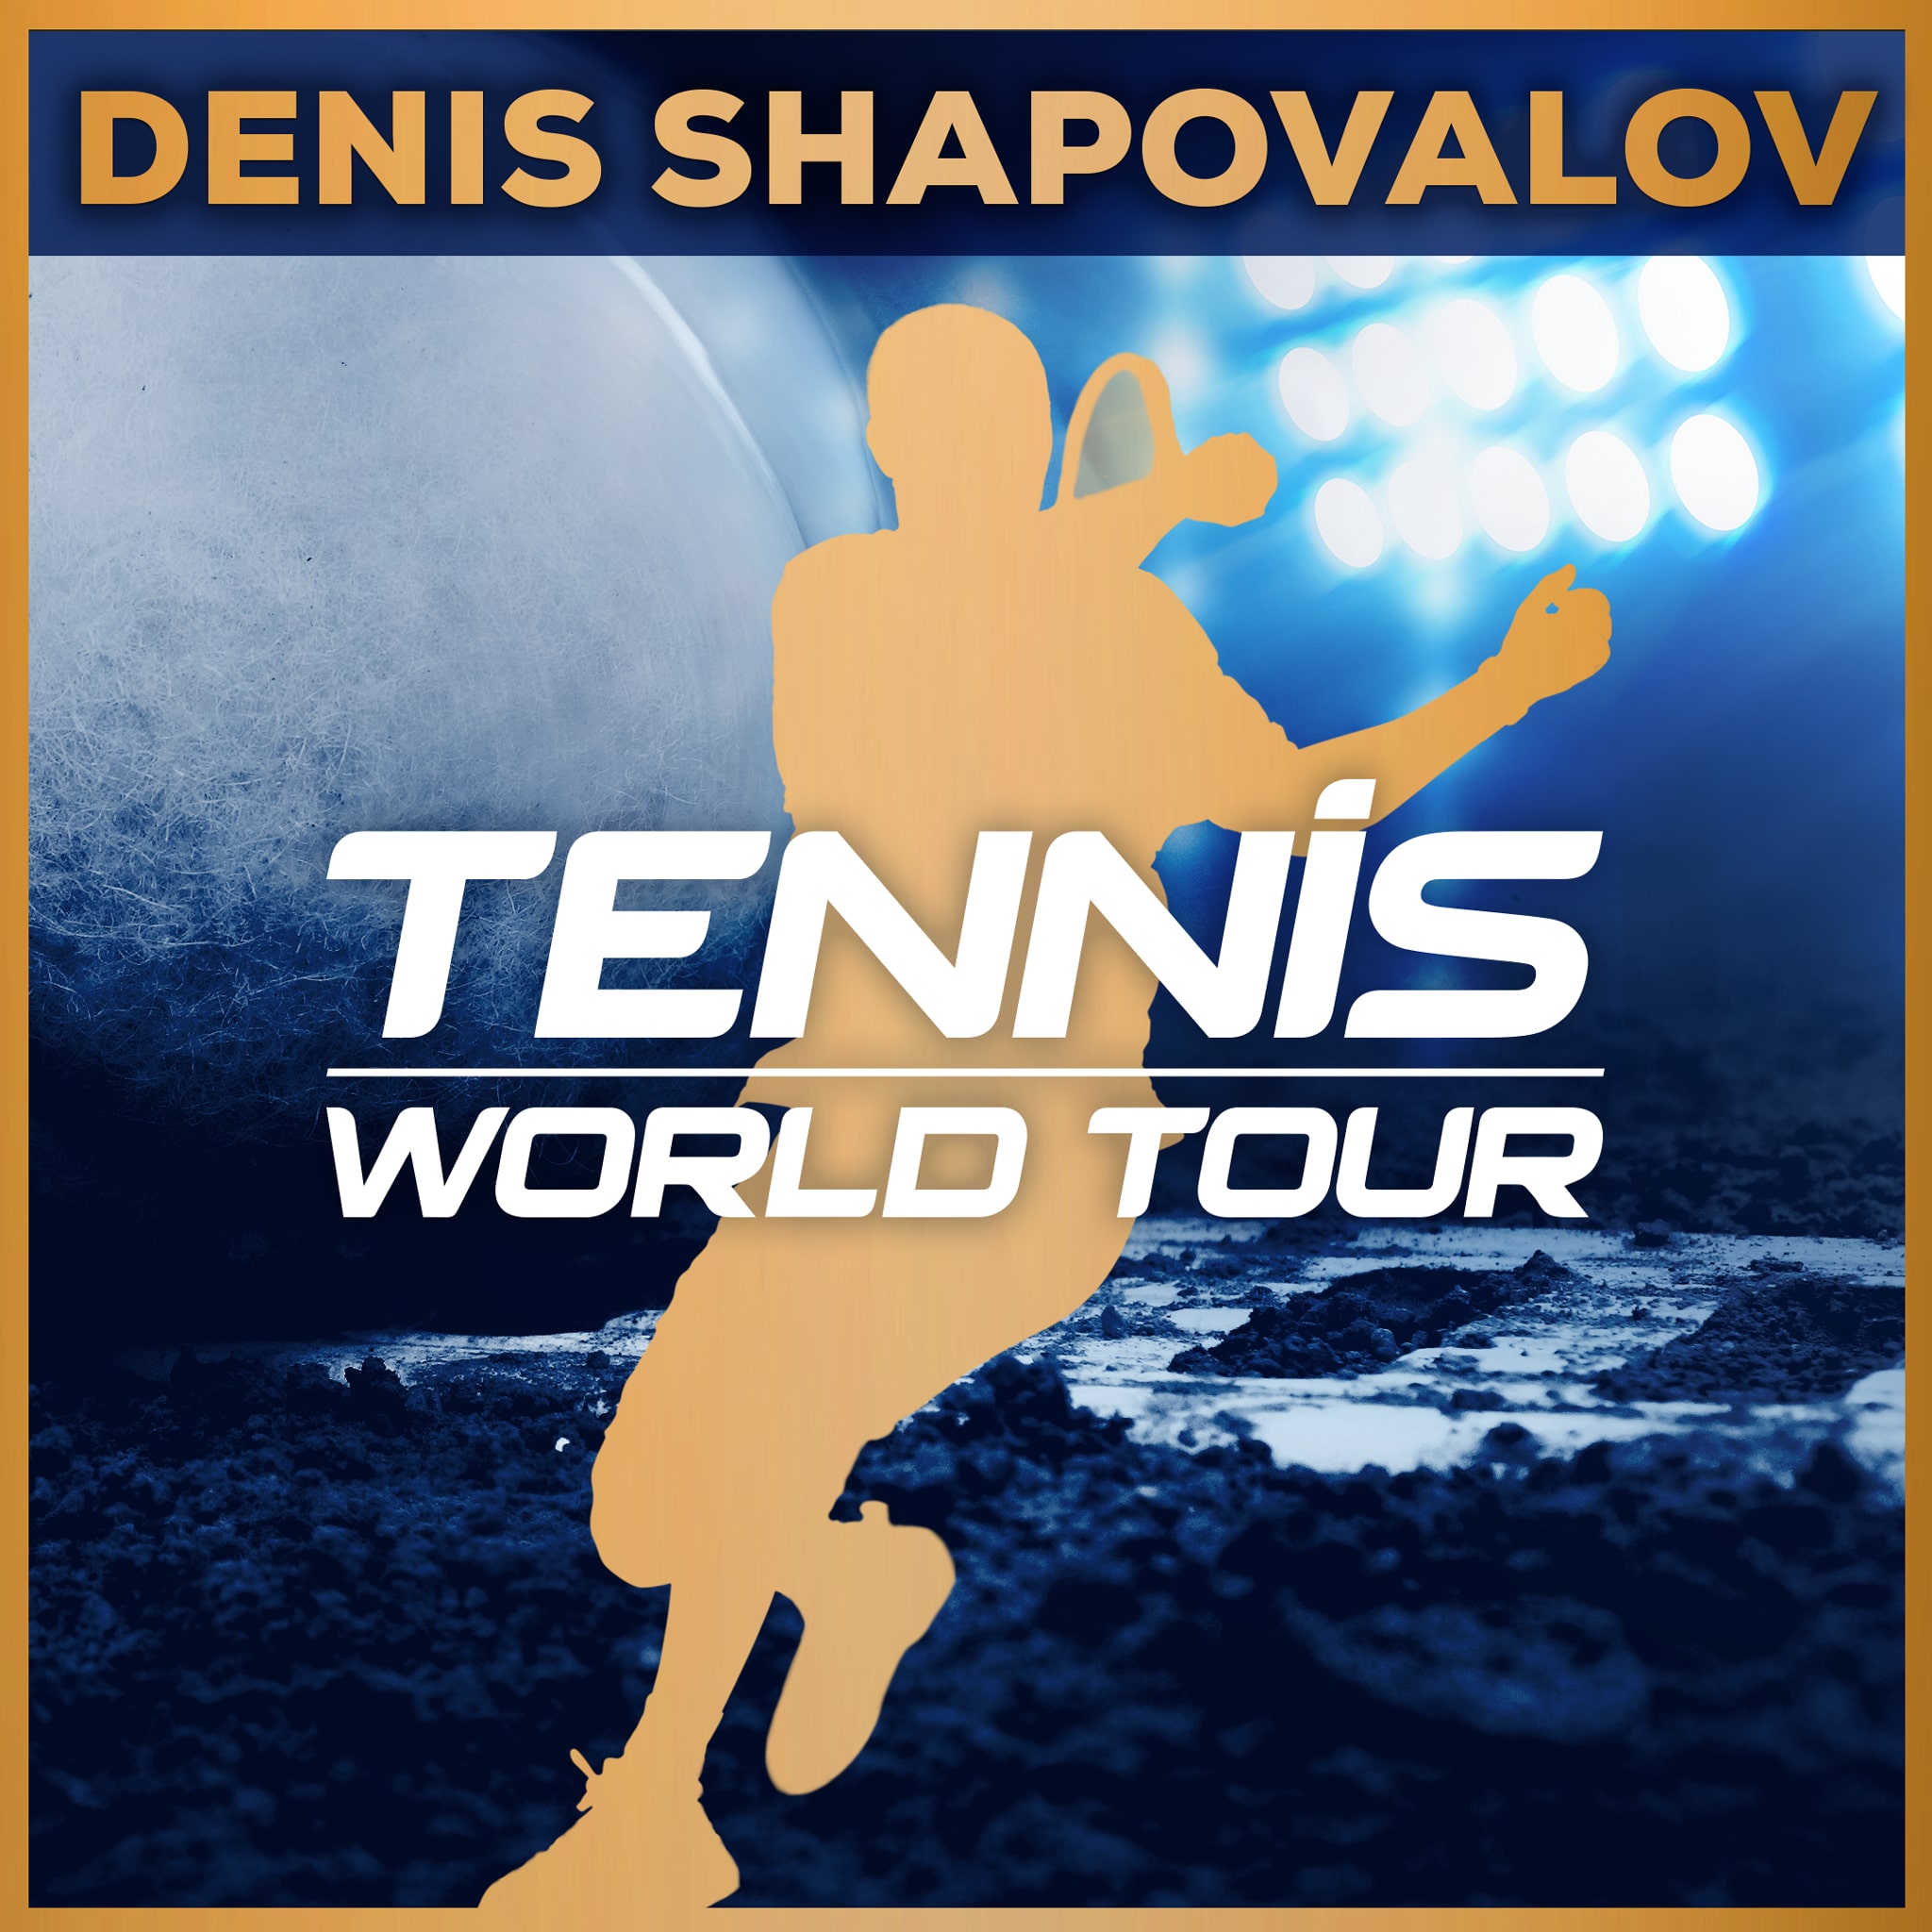 Tennis World Tour - Denis Shapovalov